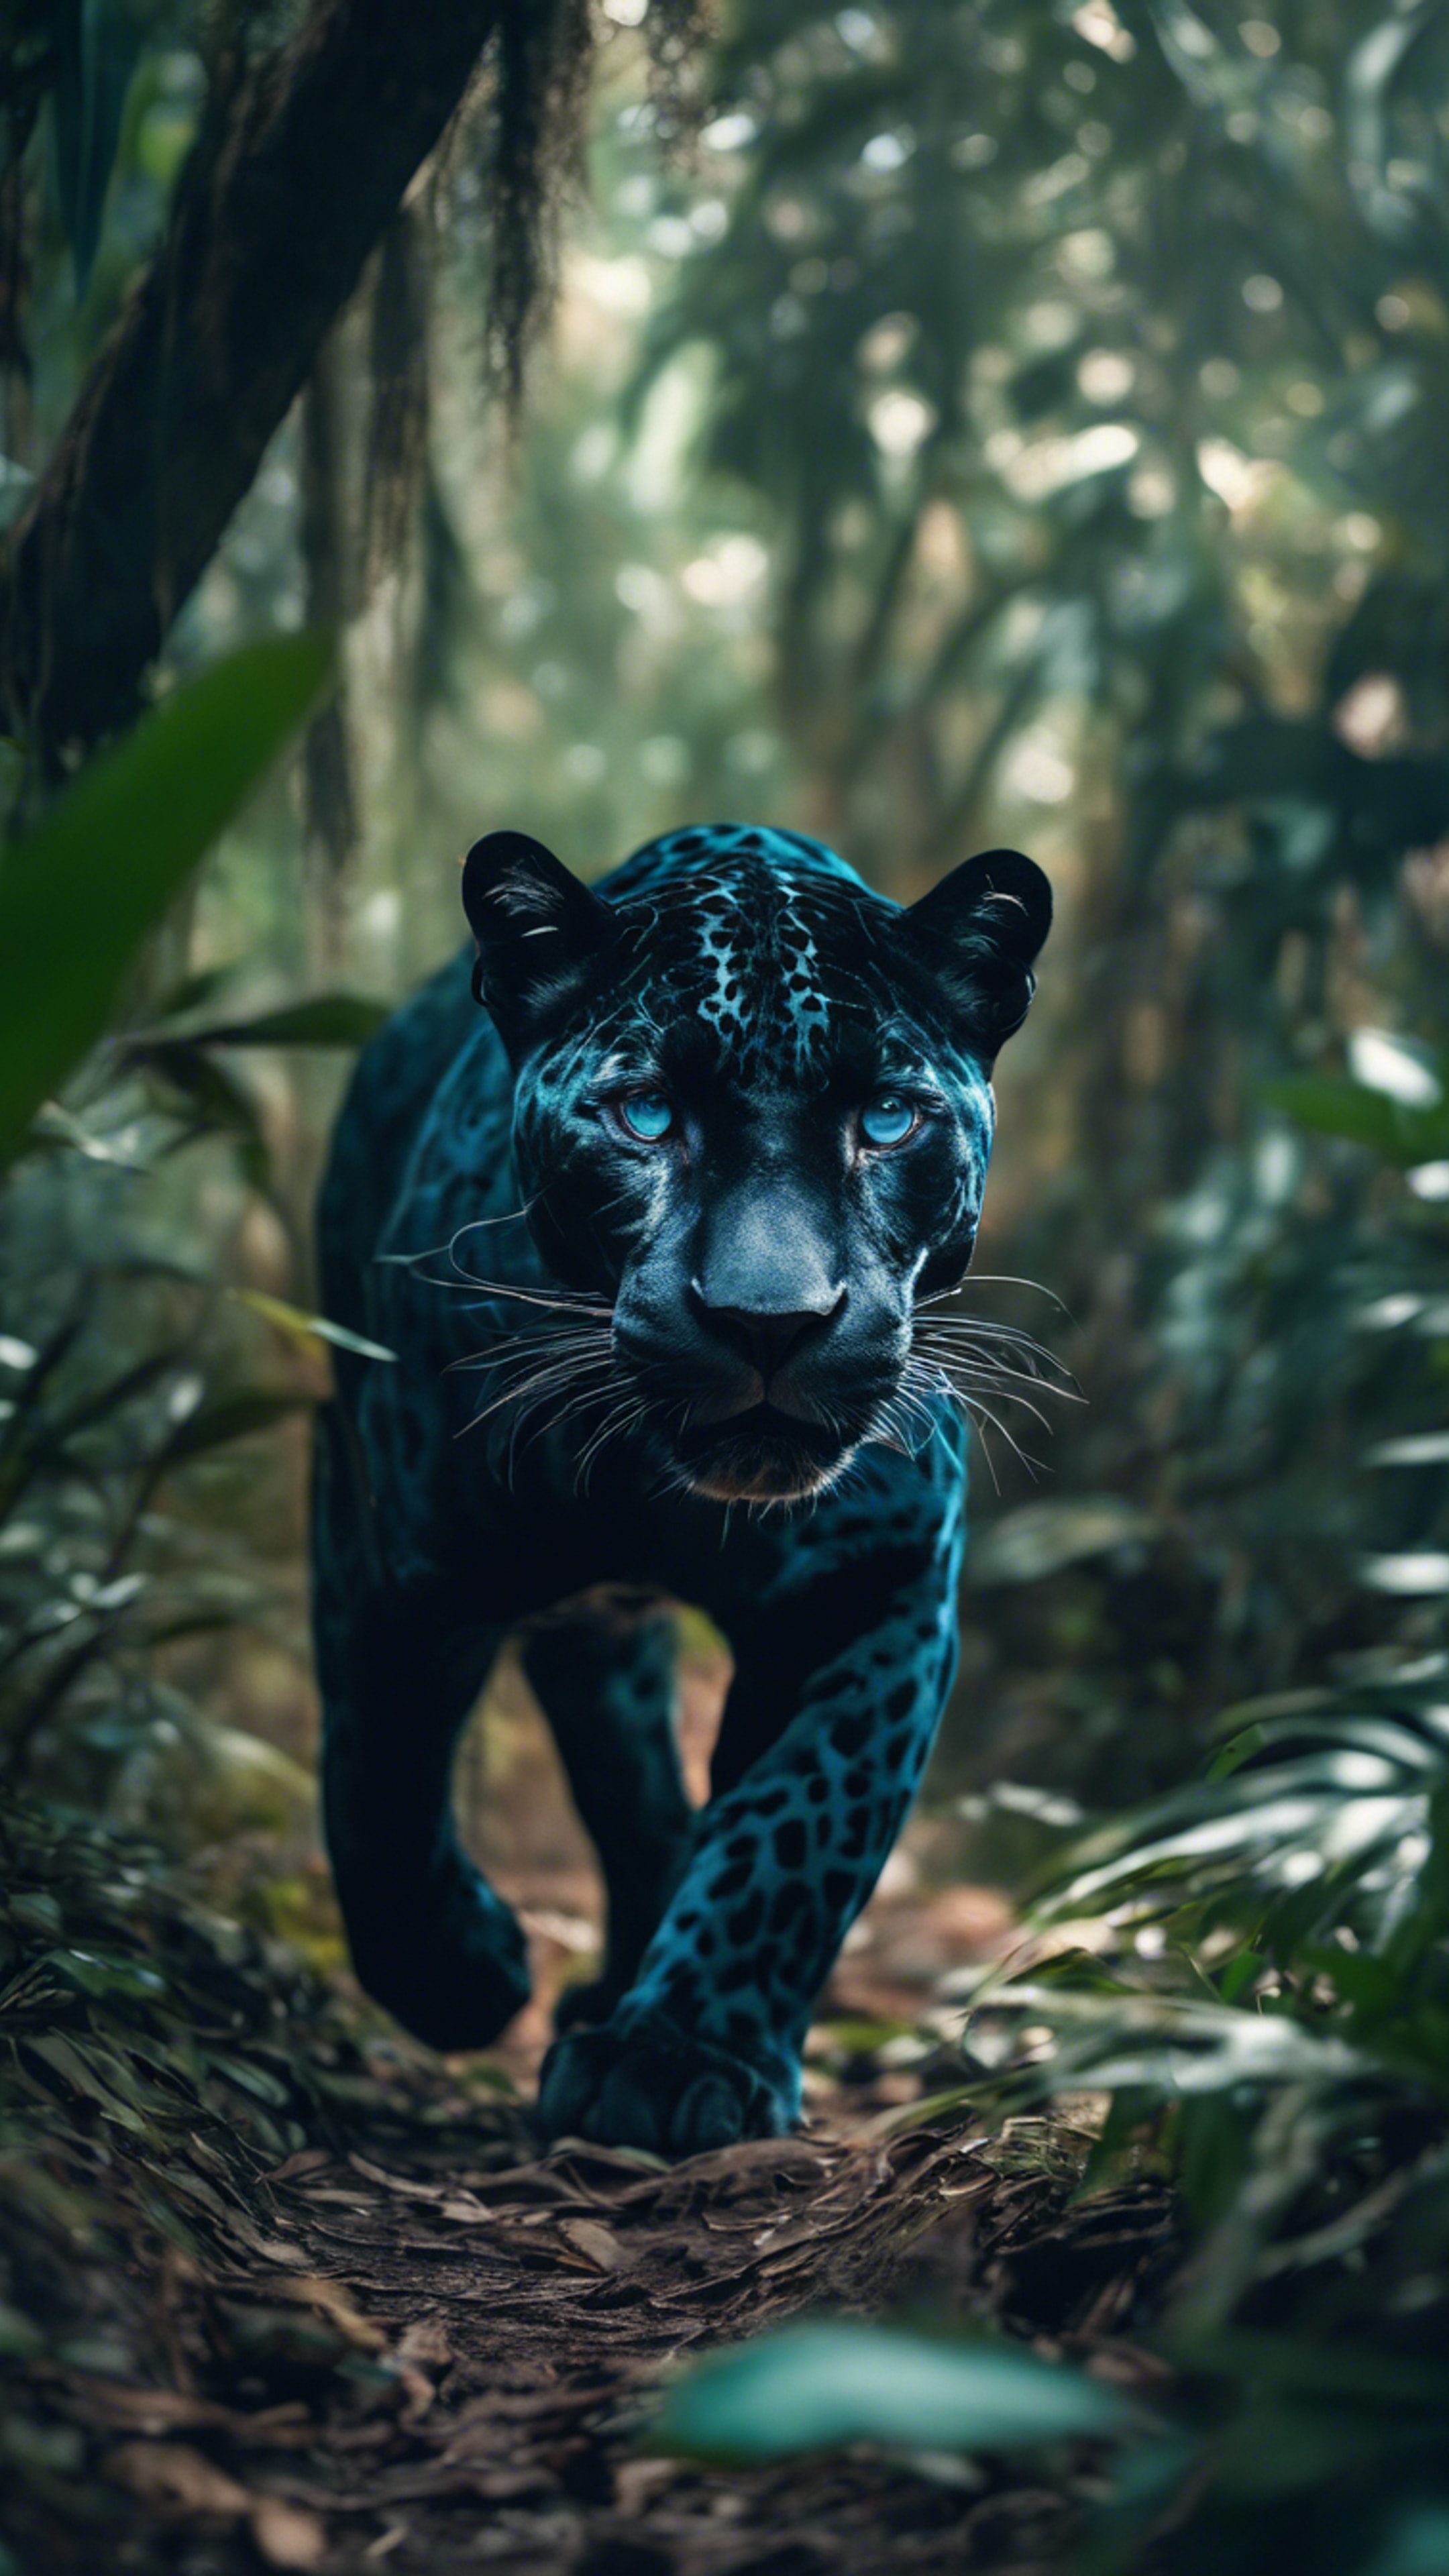 A black jaguar, eyes glowing with cool neon blue hues, prowling through a dark jungle.壁紙[06d4596780d7432e9648]